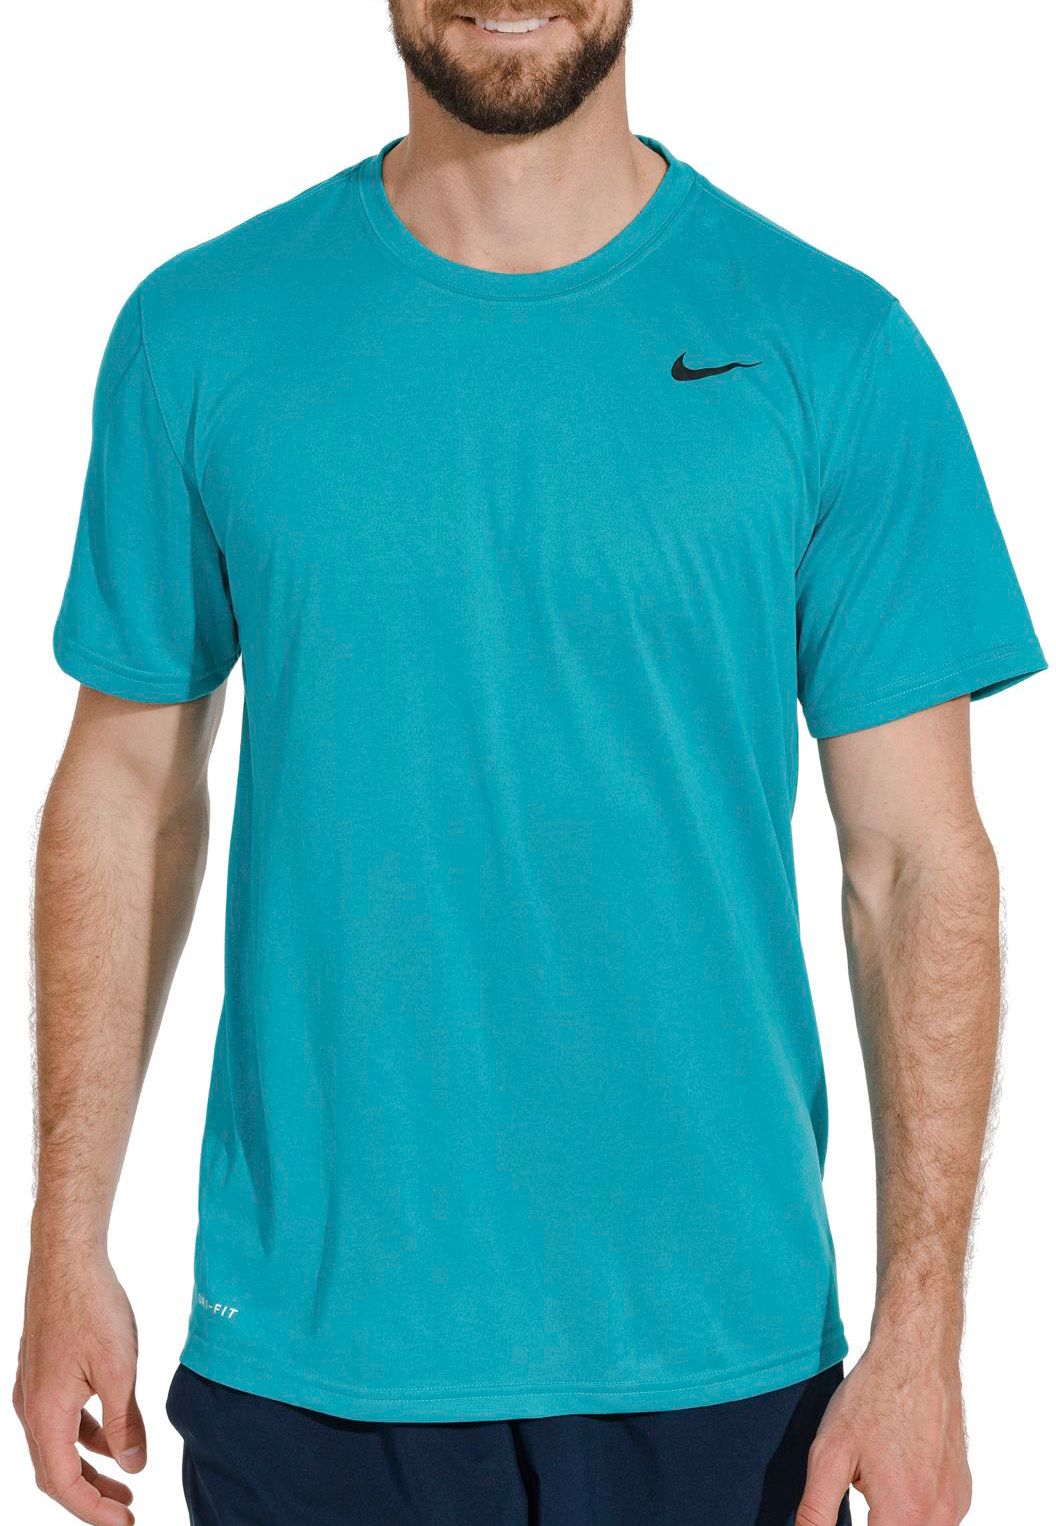 Nike Men's Legend 2.0 T-Shirt (Regular and Big & Tall) - .97 - .97